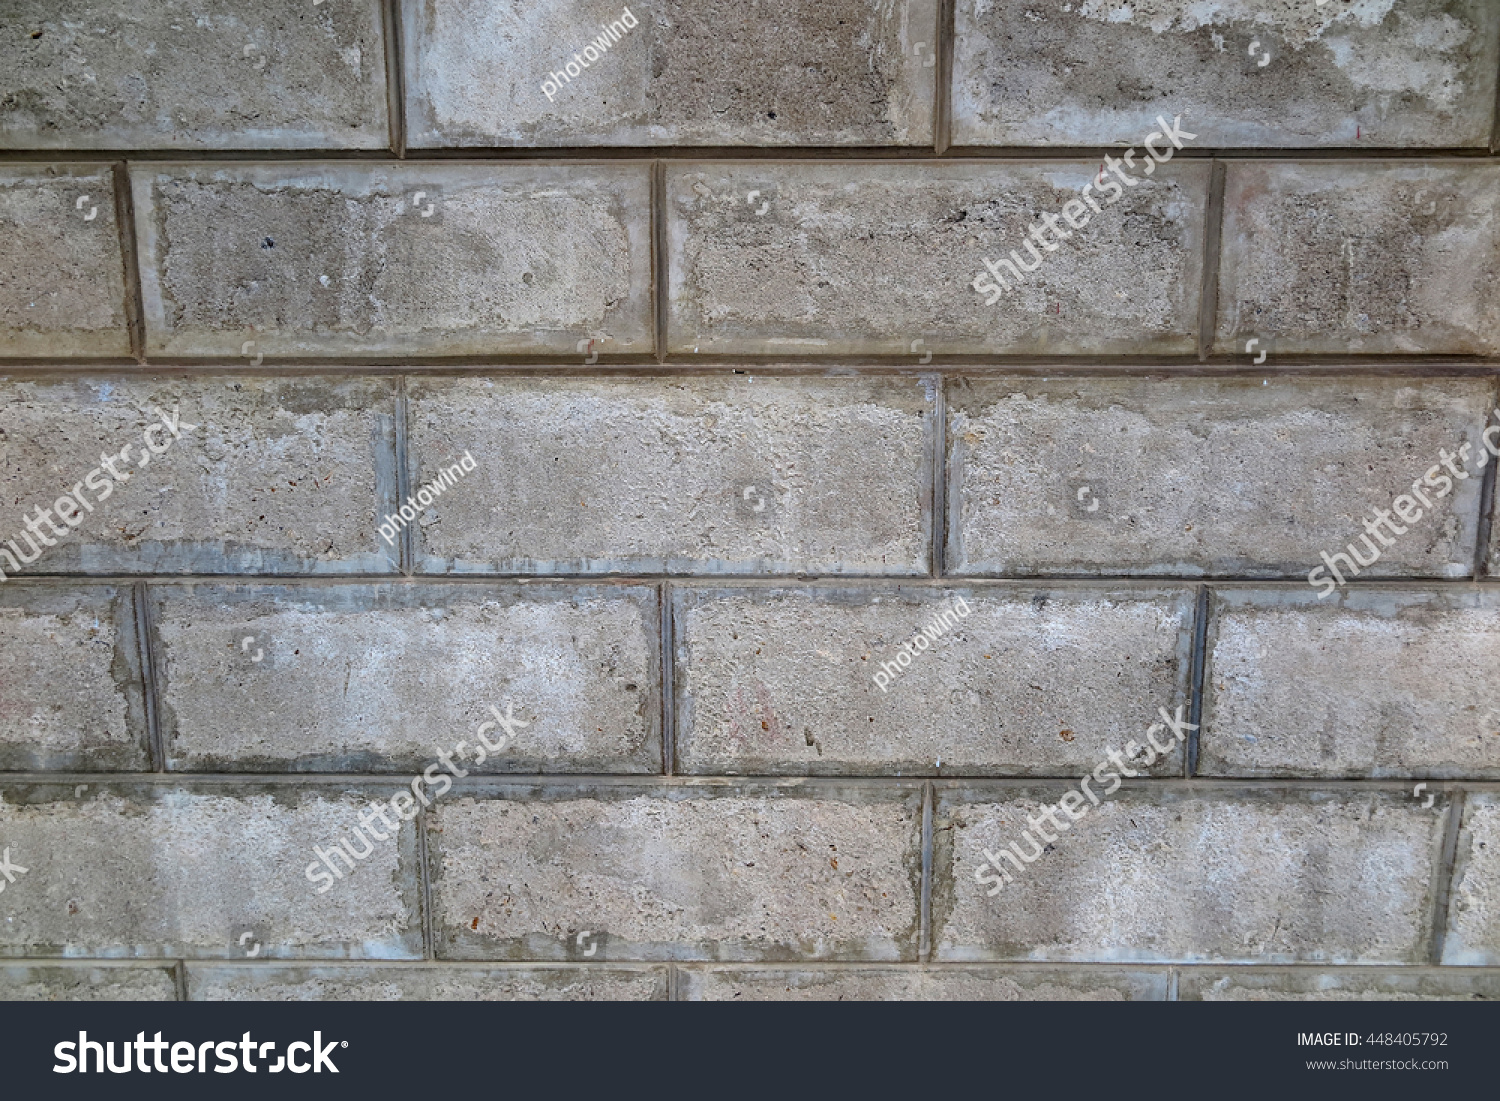 Quay Concrete Blocks Wall Stock Photo 448405792 - Shutterstock